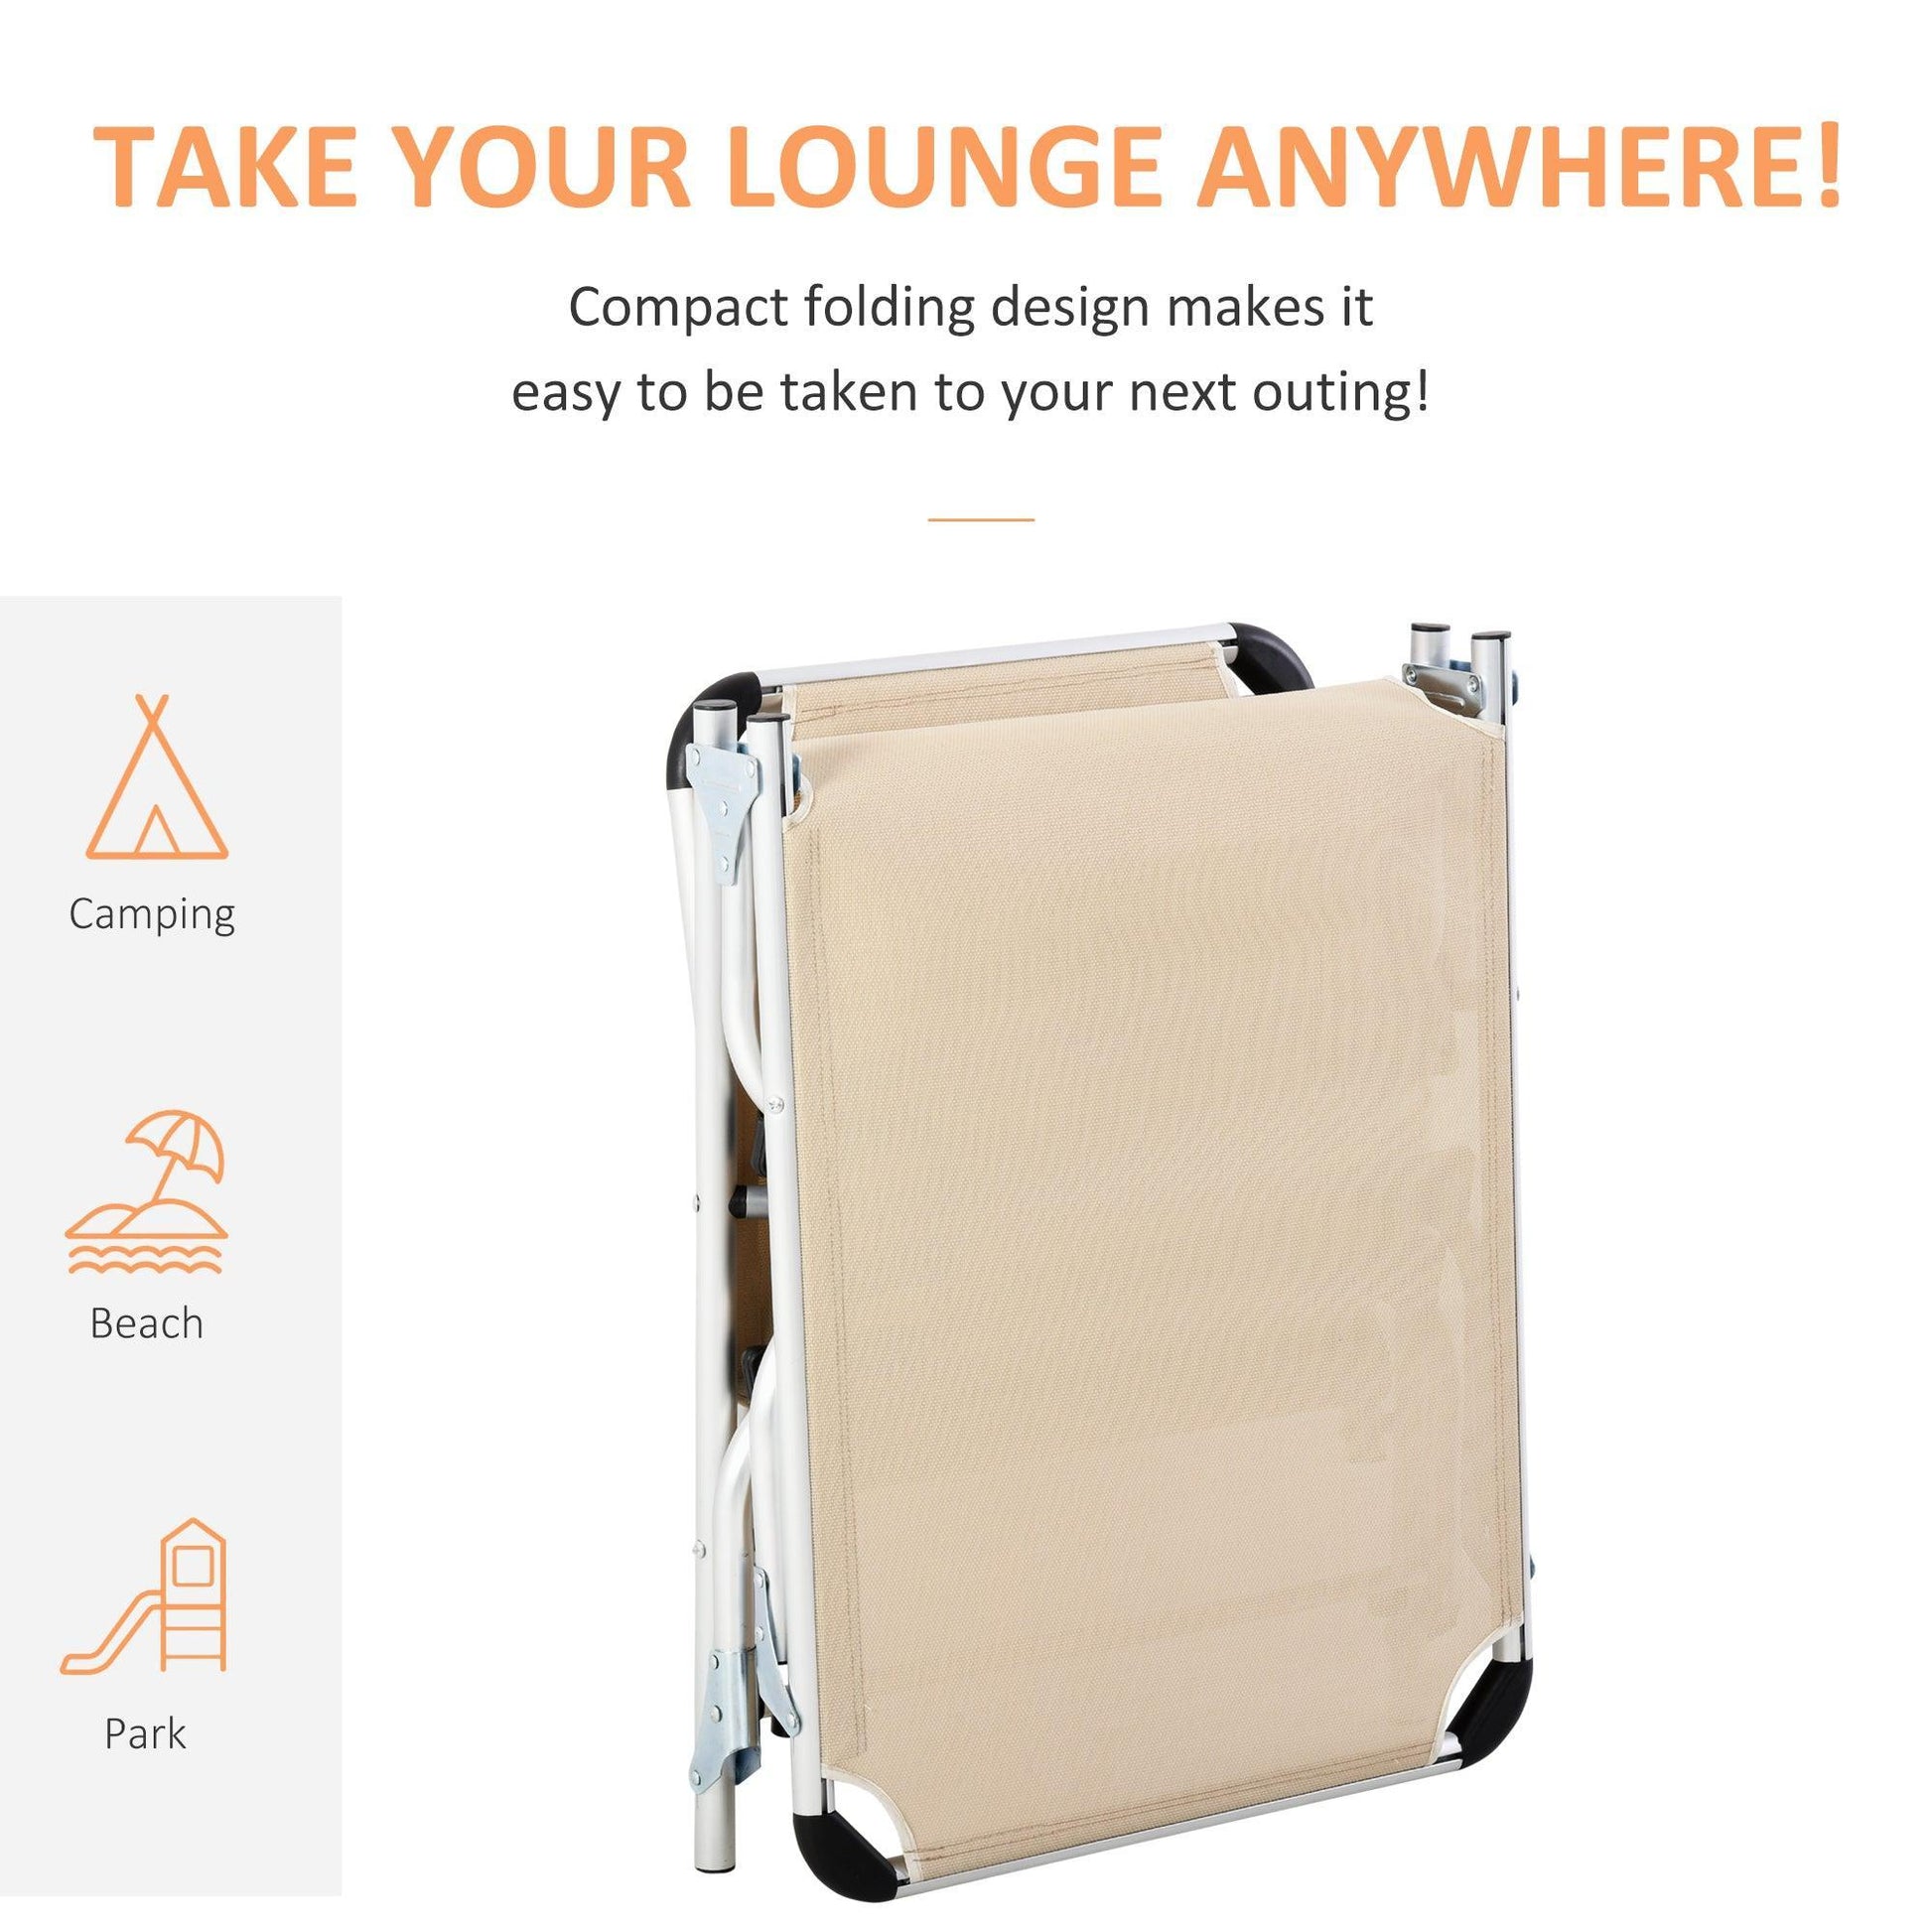 Outsunny Foldable Reclining Sun Lounger Chair - Adjustable (Khaki) - ALL4U RETAILER LTD